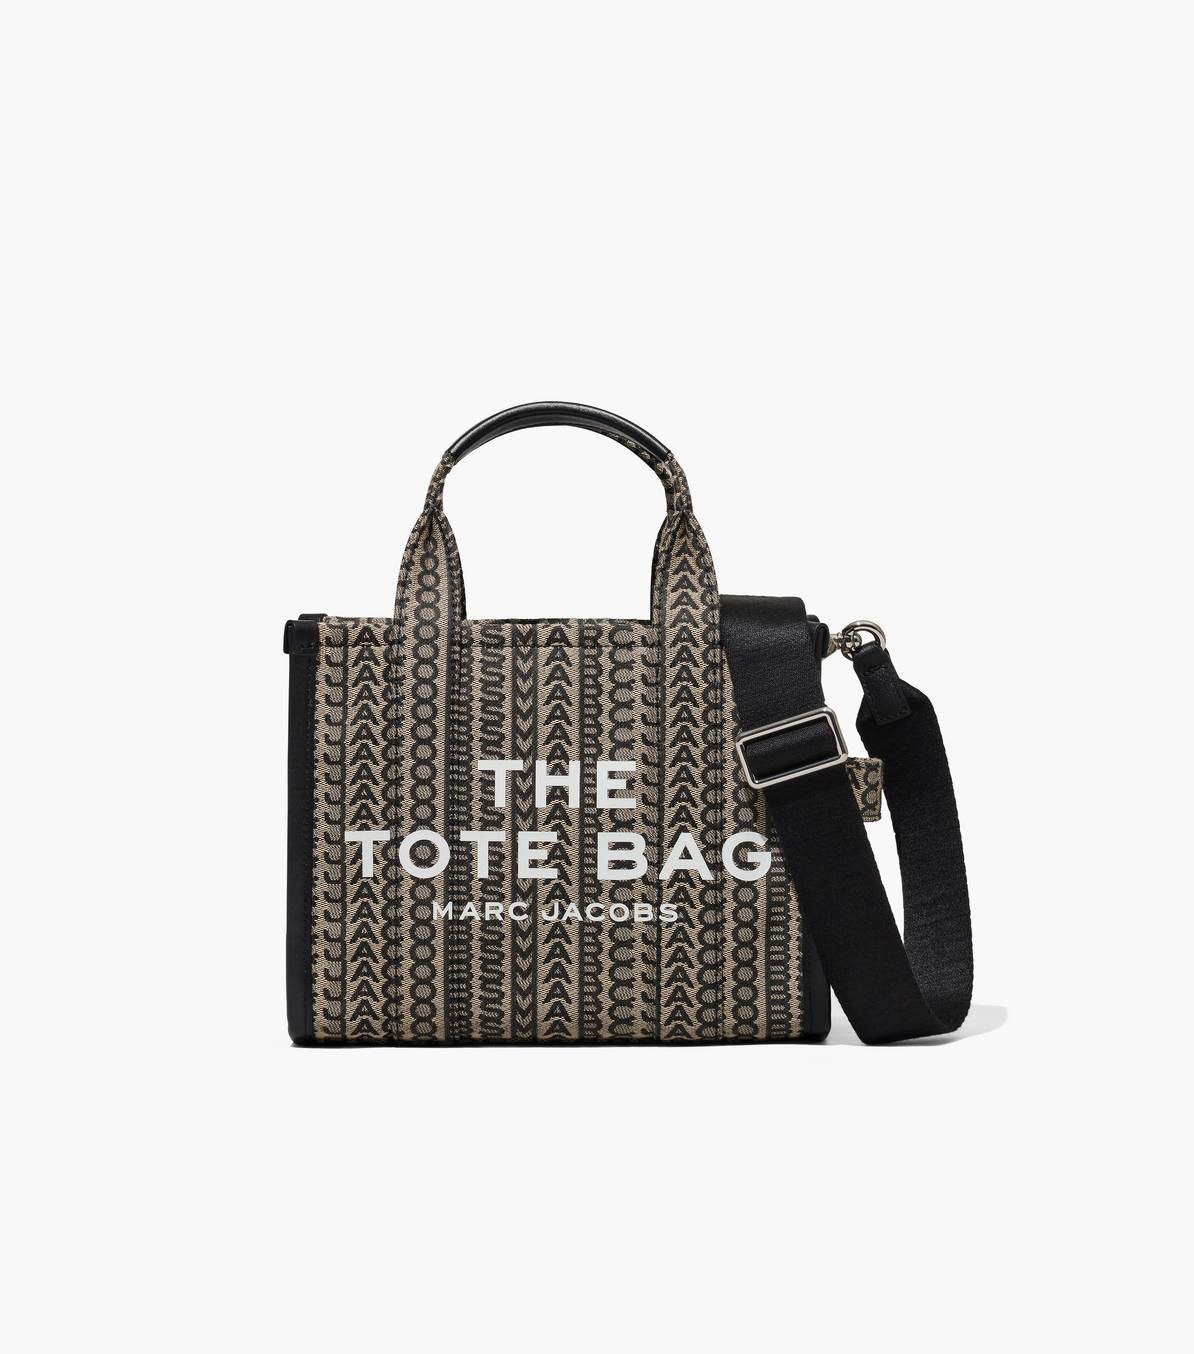 The Monogram Mini Tote Bag